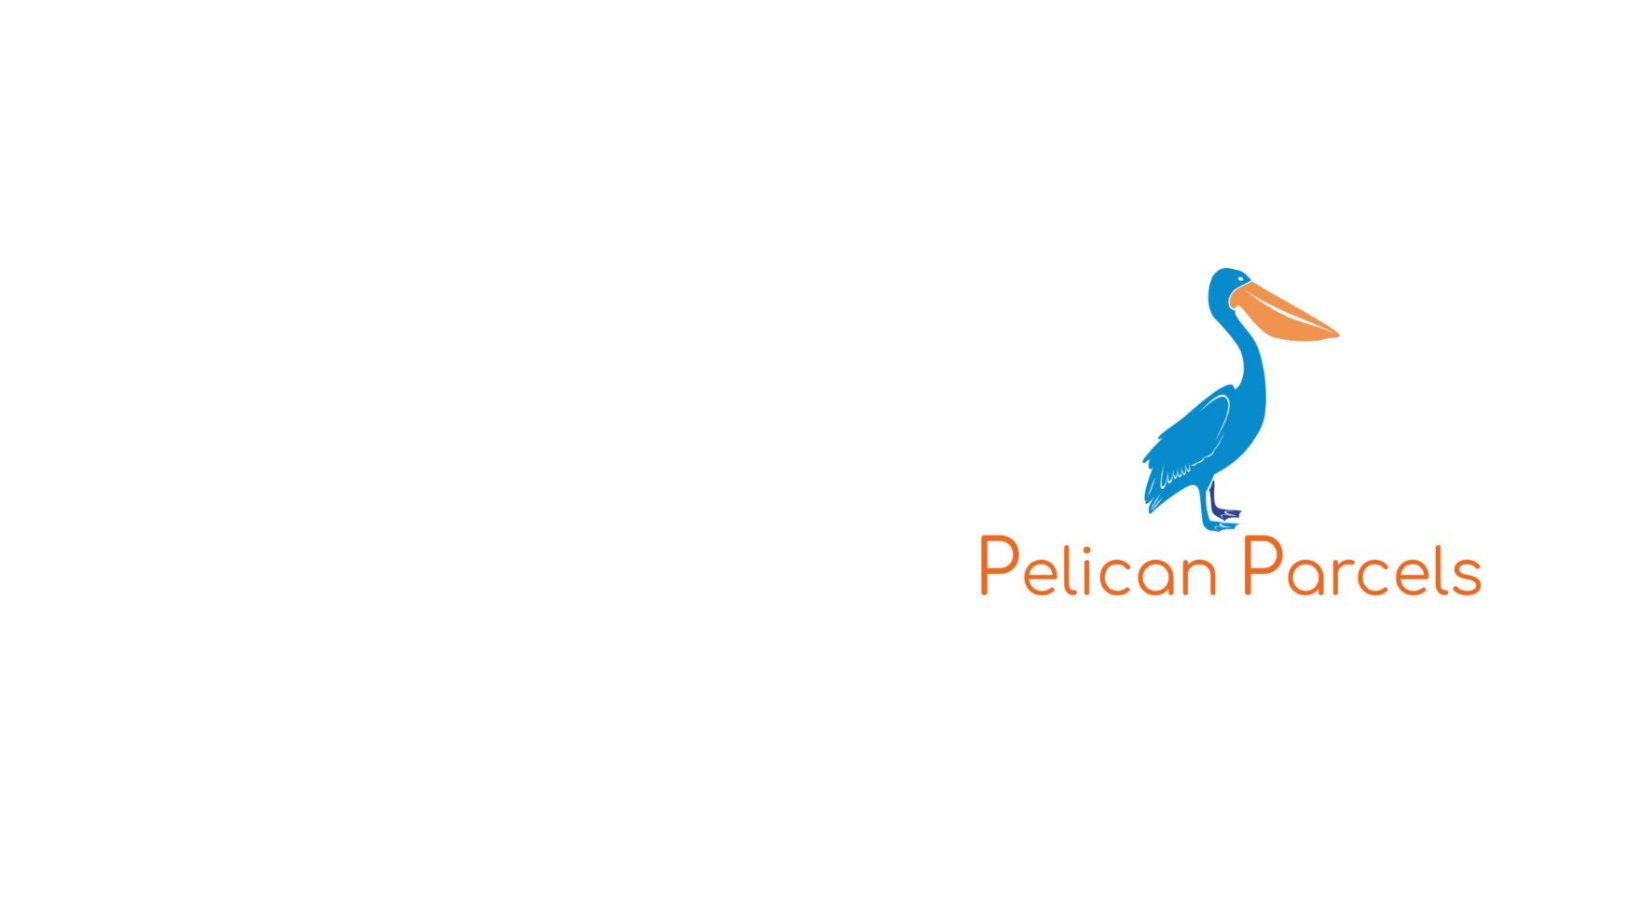 Pelican Parcels